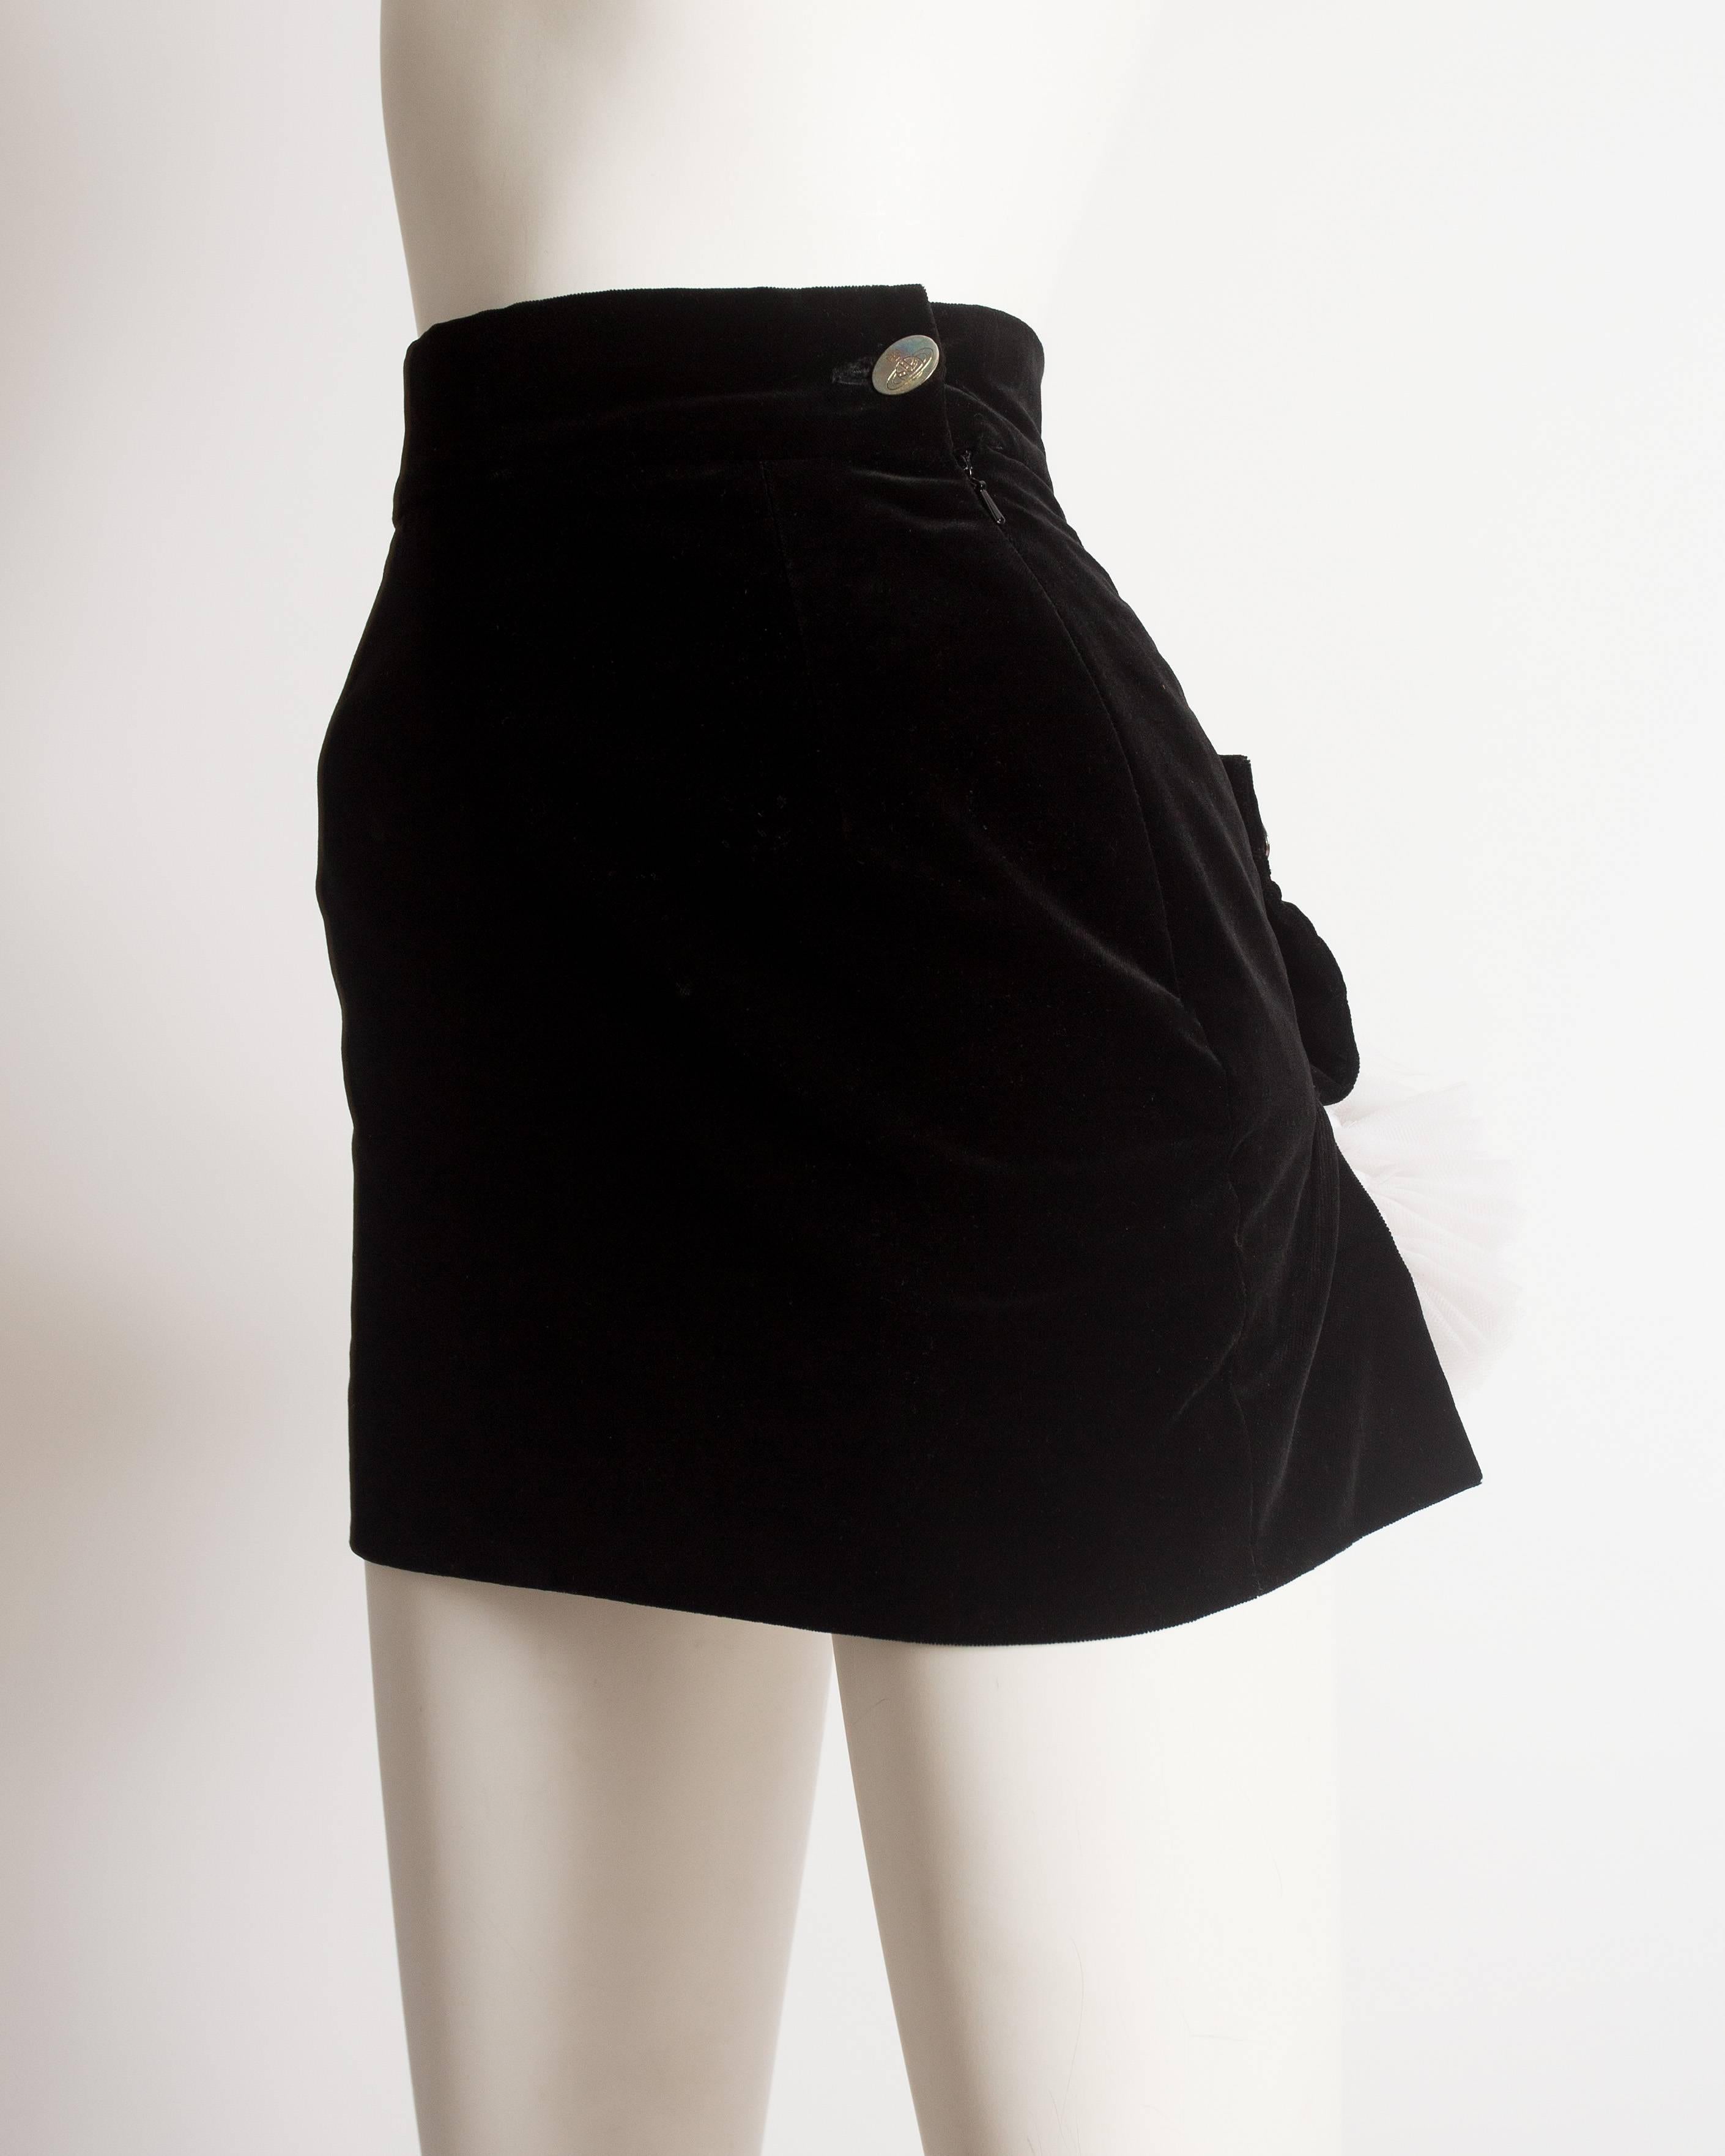 Black Vivienne Westwood black velvet mini skirt with crinoline, circa 1991